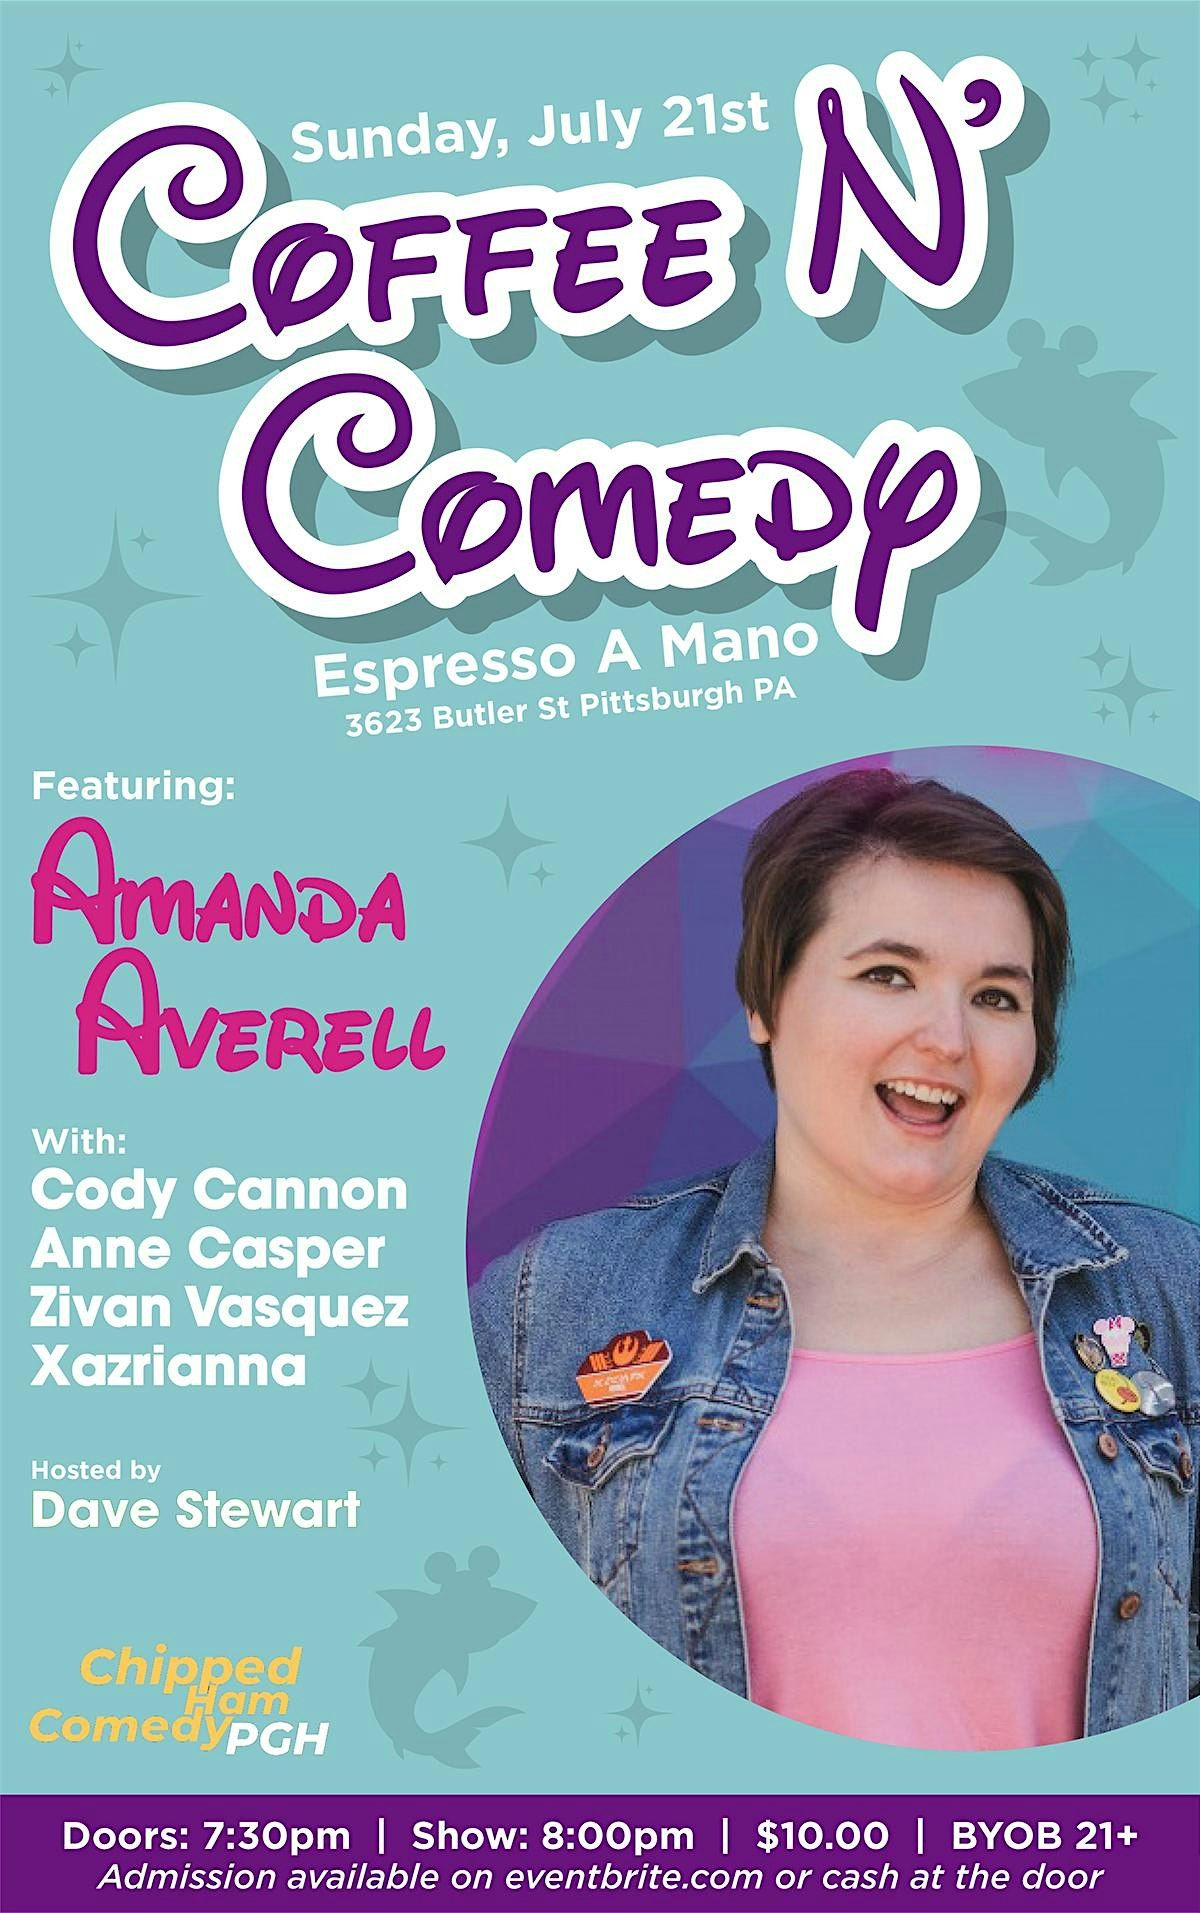 Coffee n Comedy featuring Amanda Averell